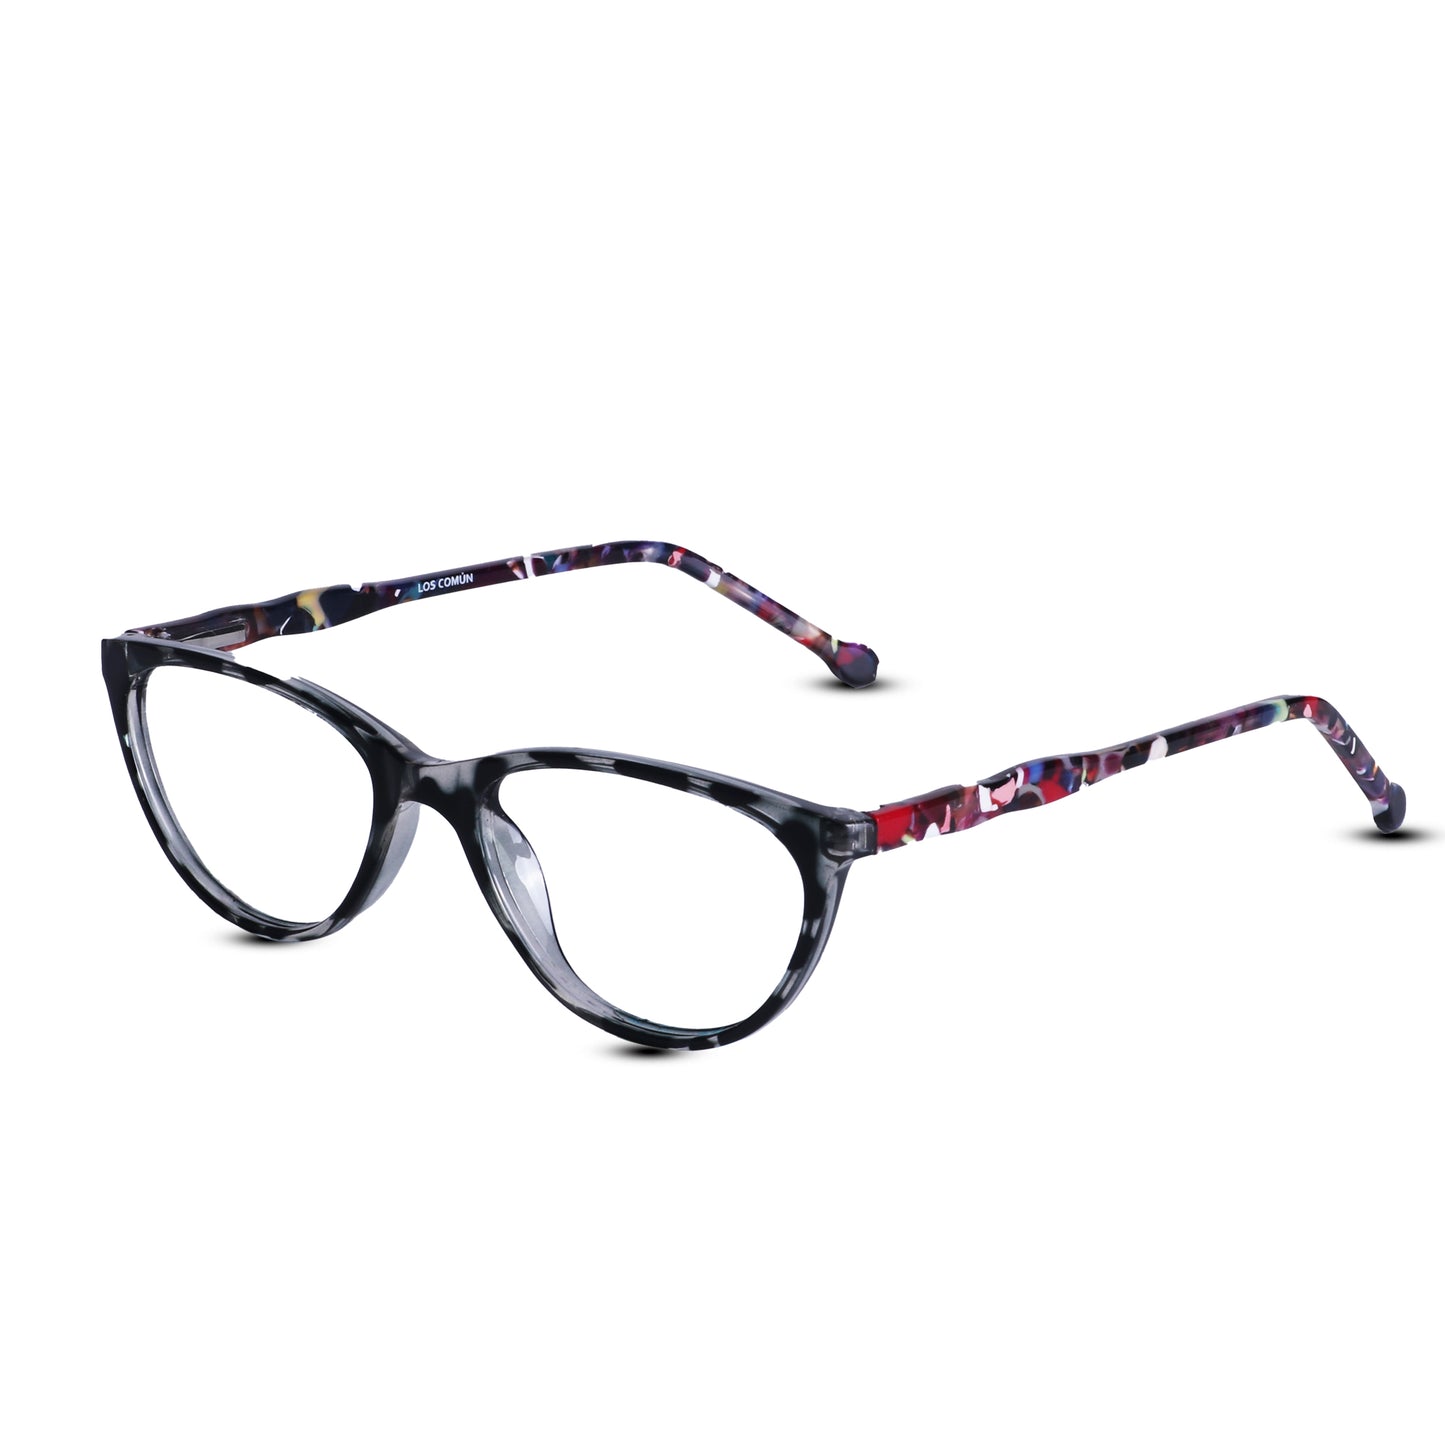 Loscomun Computer Glasses Red Cateye Eyeglasses